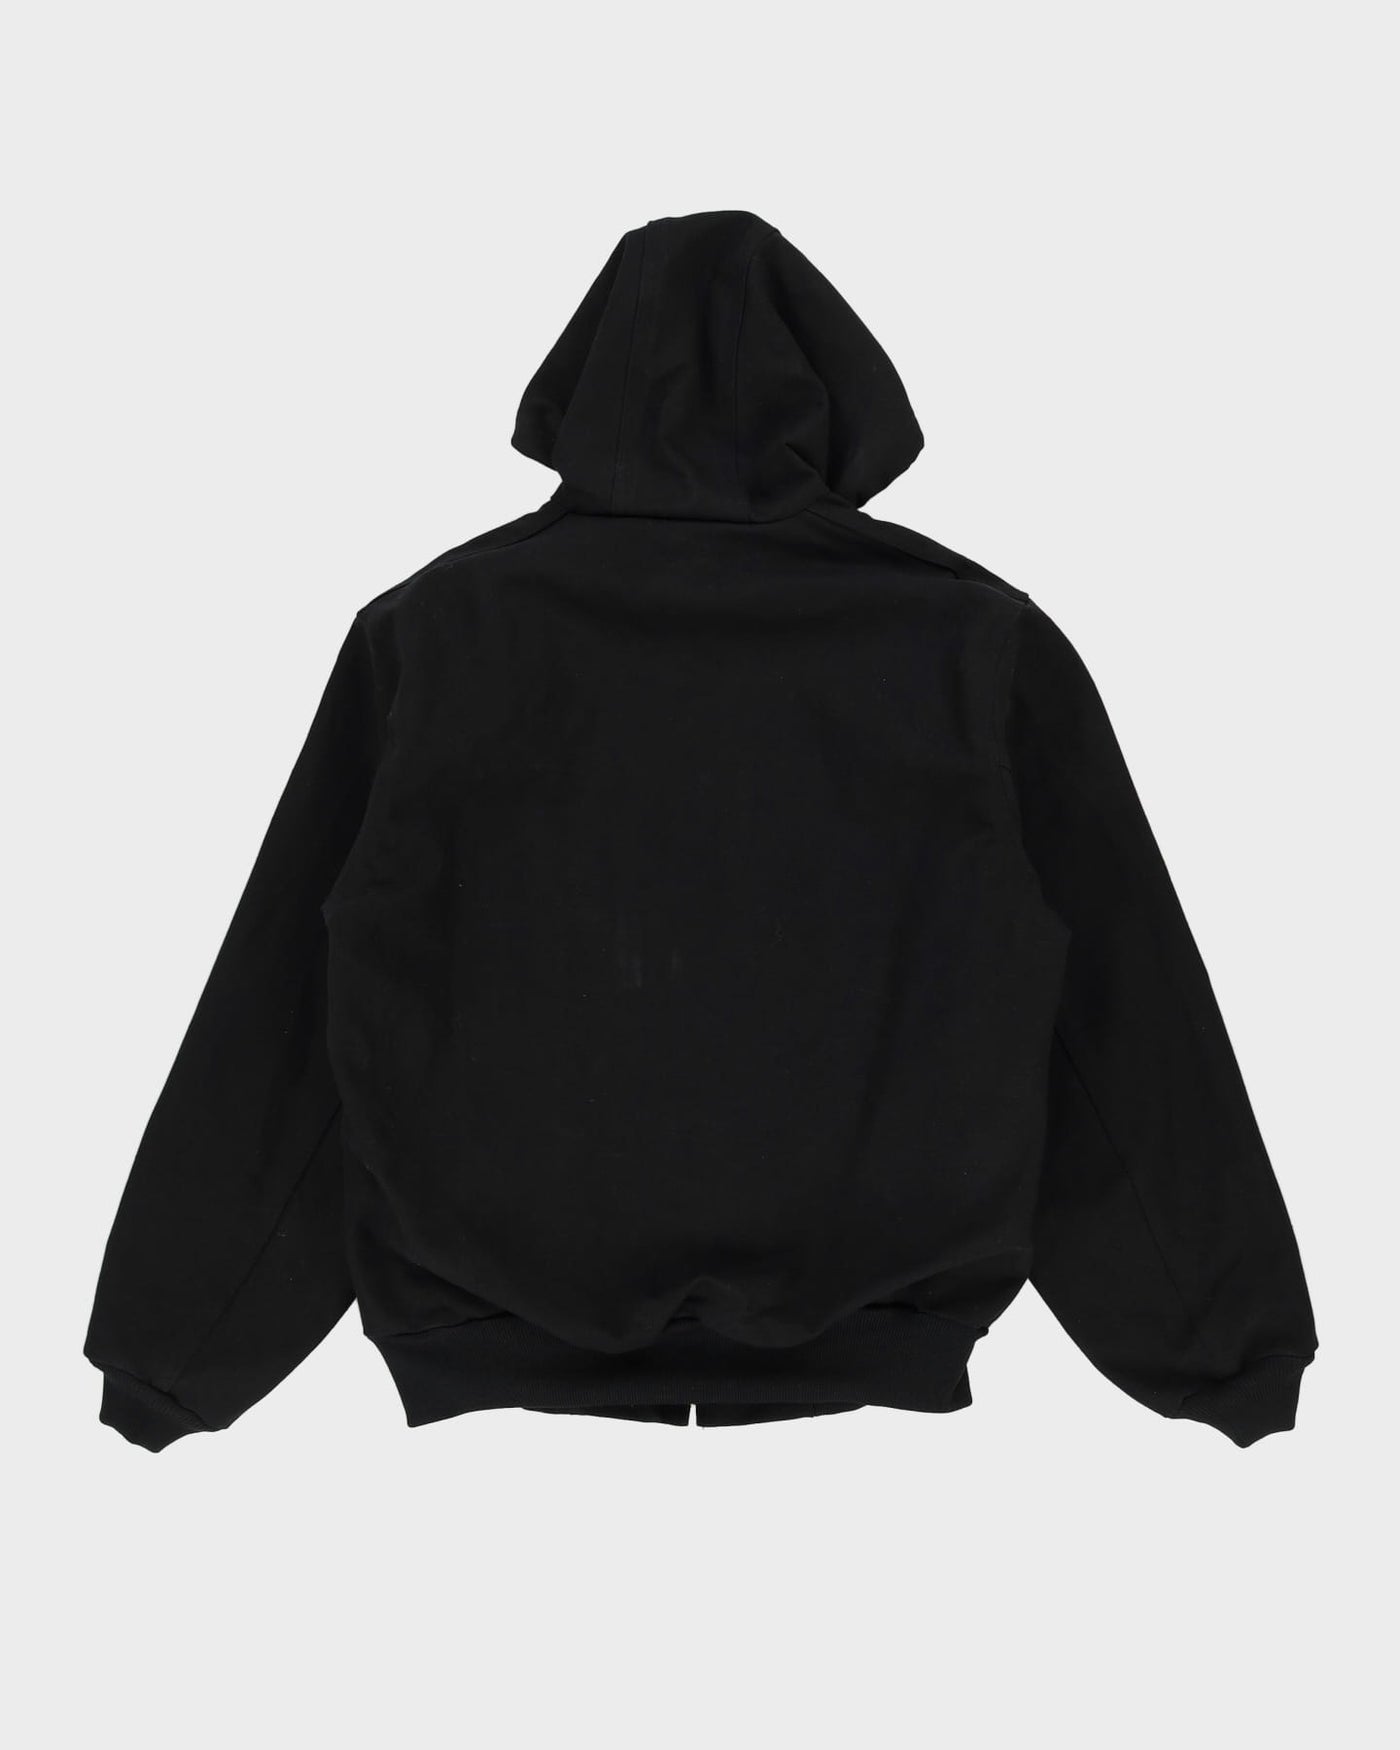 Carhartt Black Hooded Workwear / Chore Jacket - L